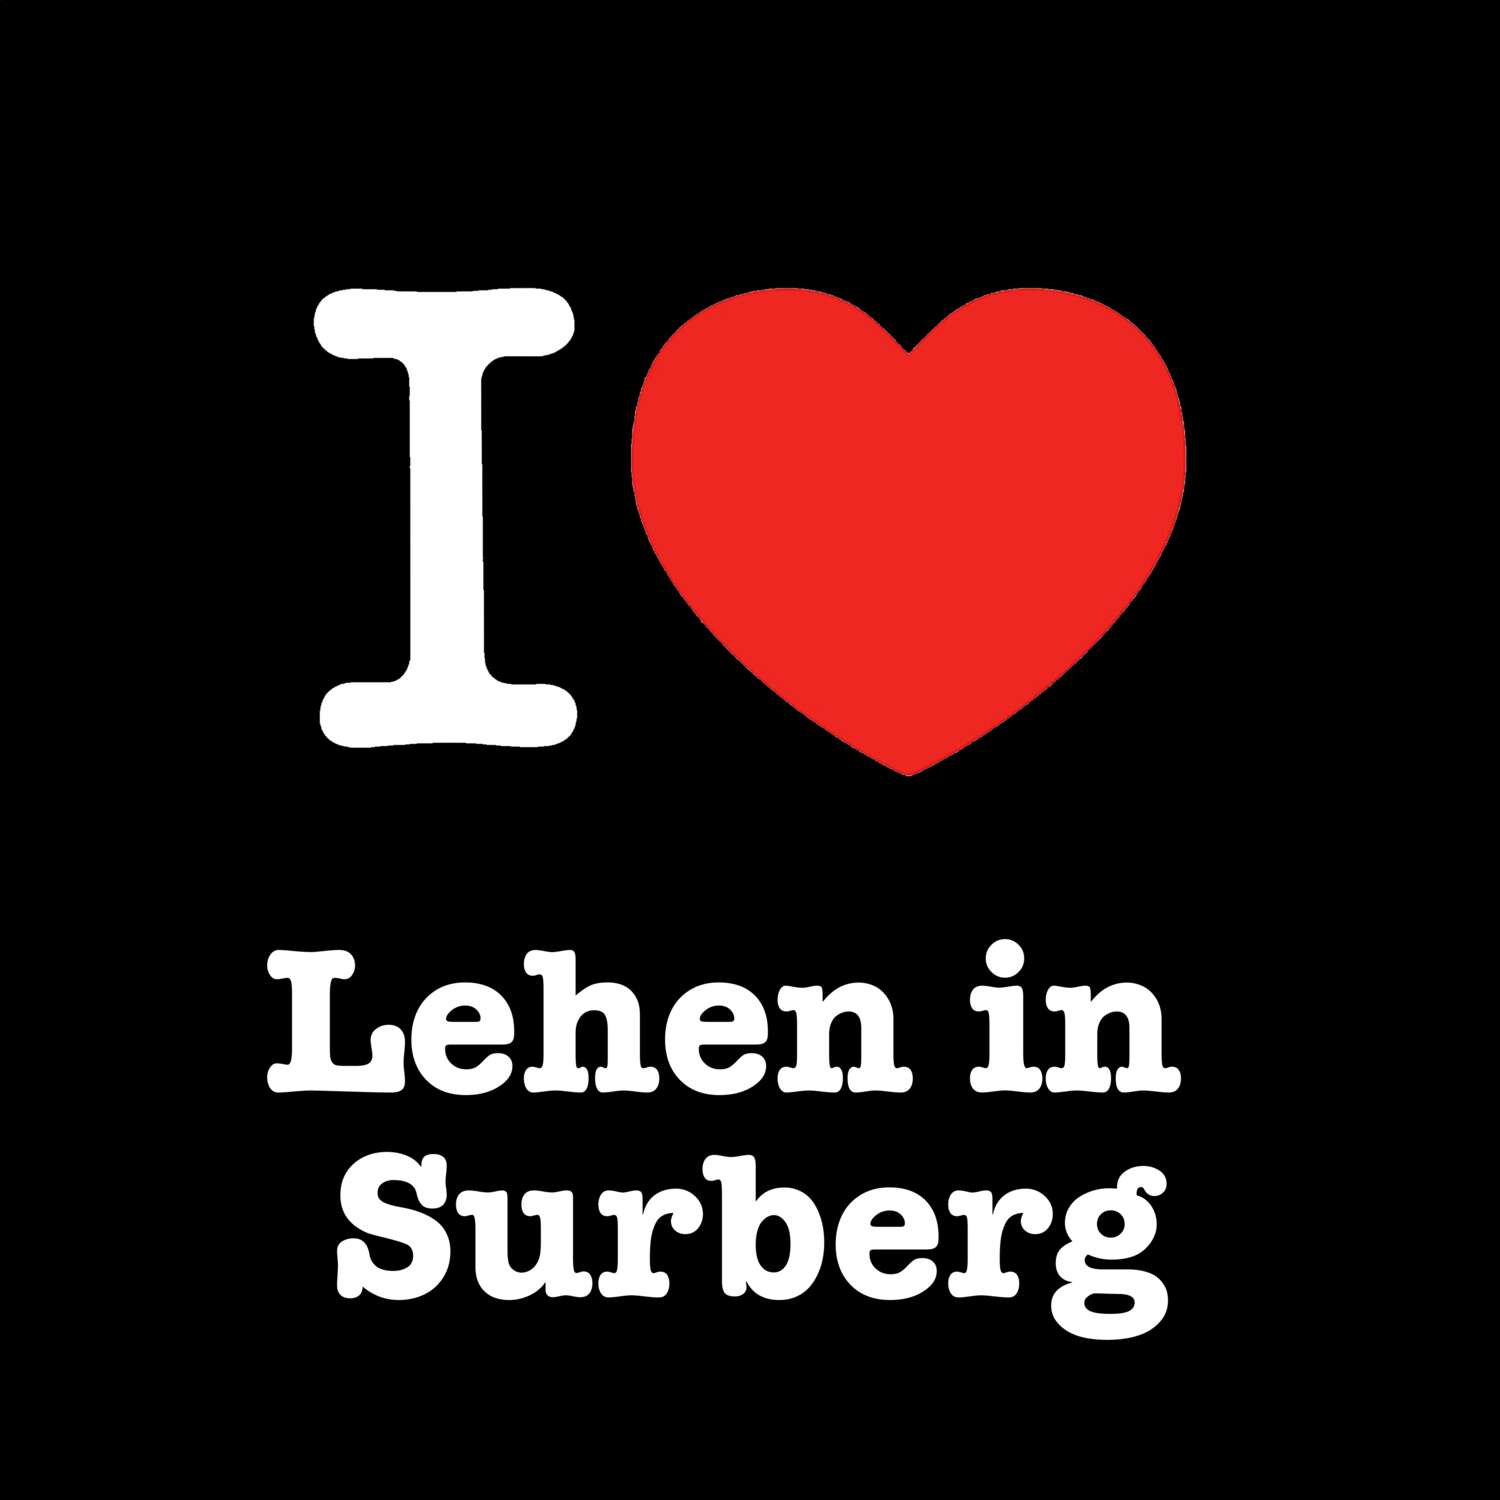 Lehen in Surberg T-Shirt »I love«